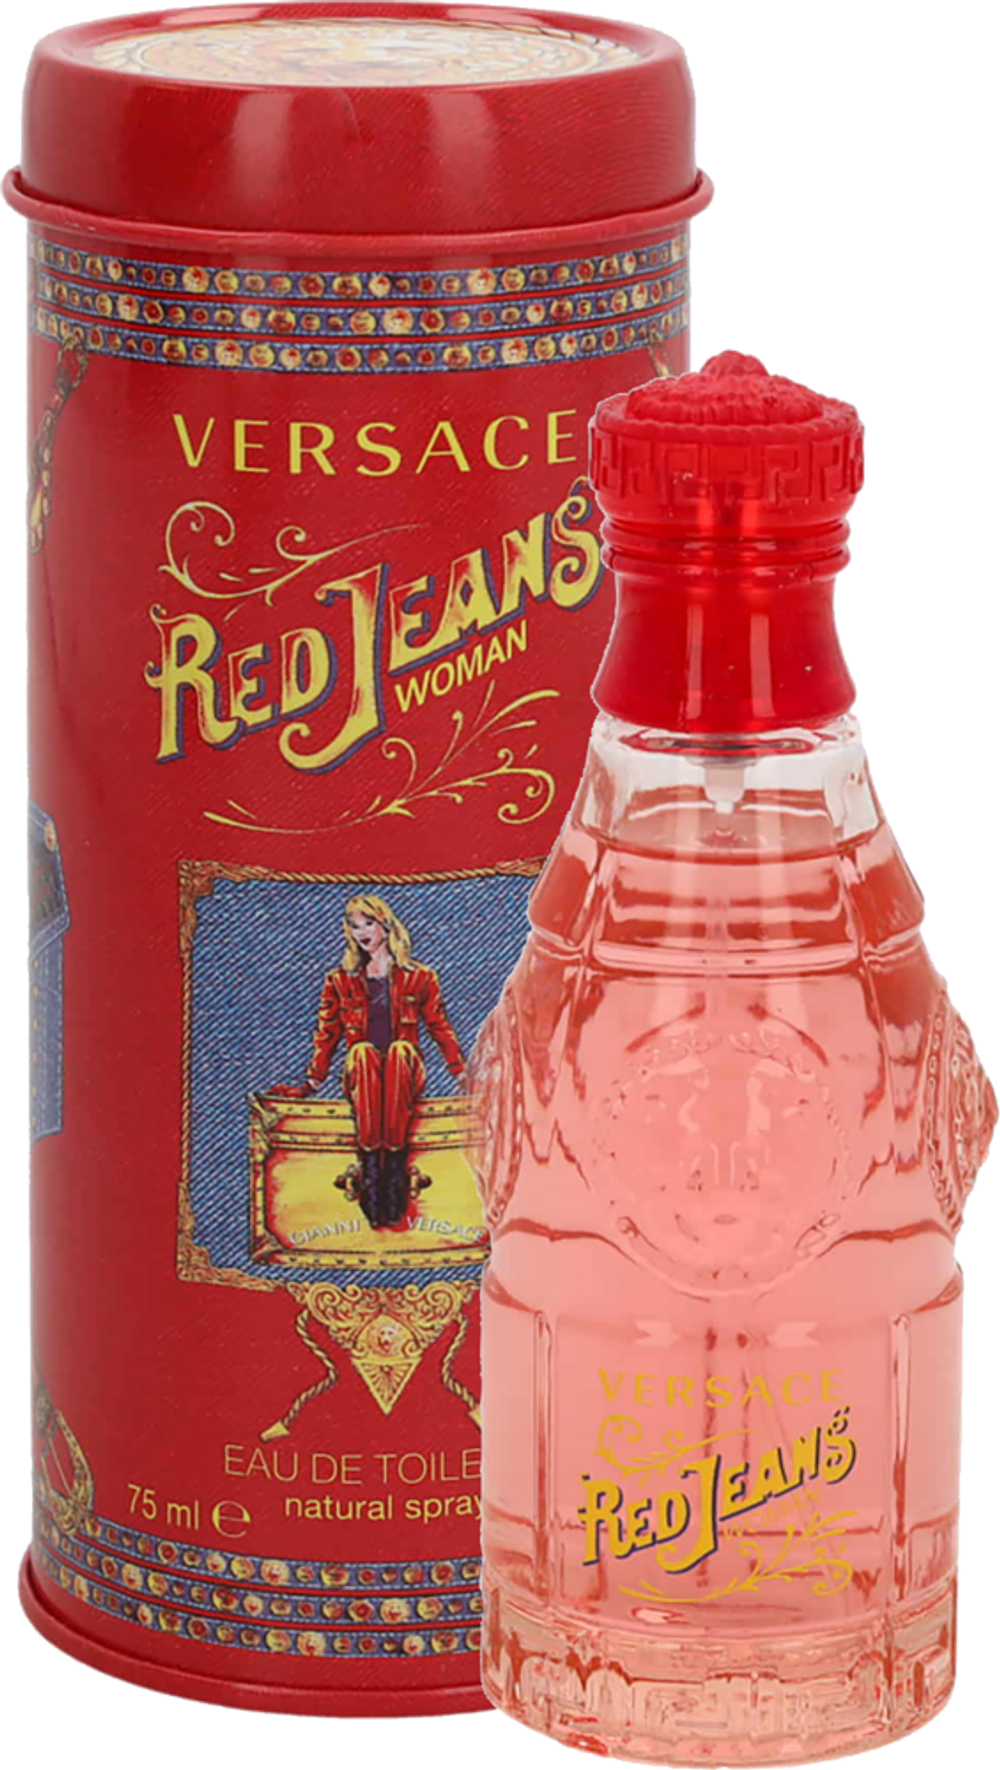 Tilbud på Versace Red Jeans Edt Spray fra Fleggaard til 119 kr.